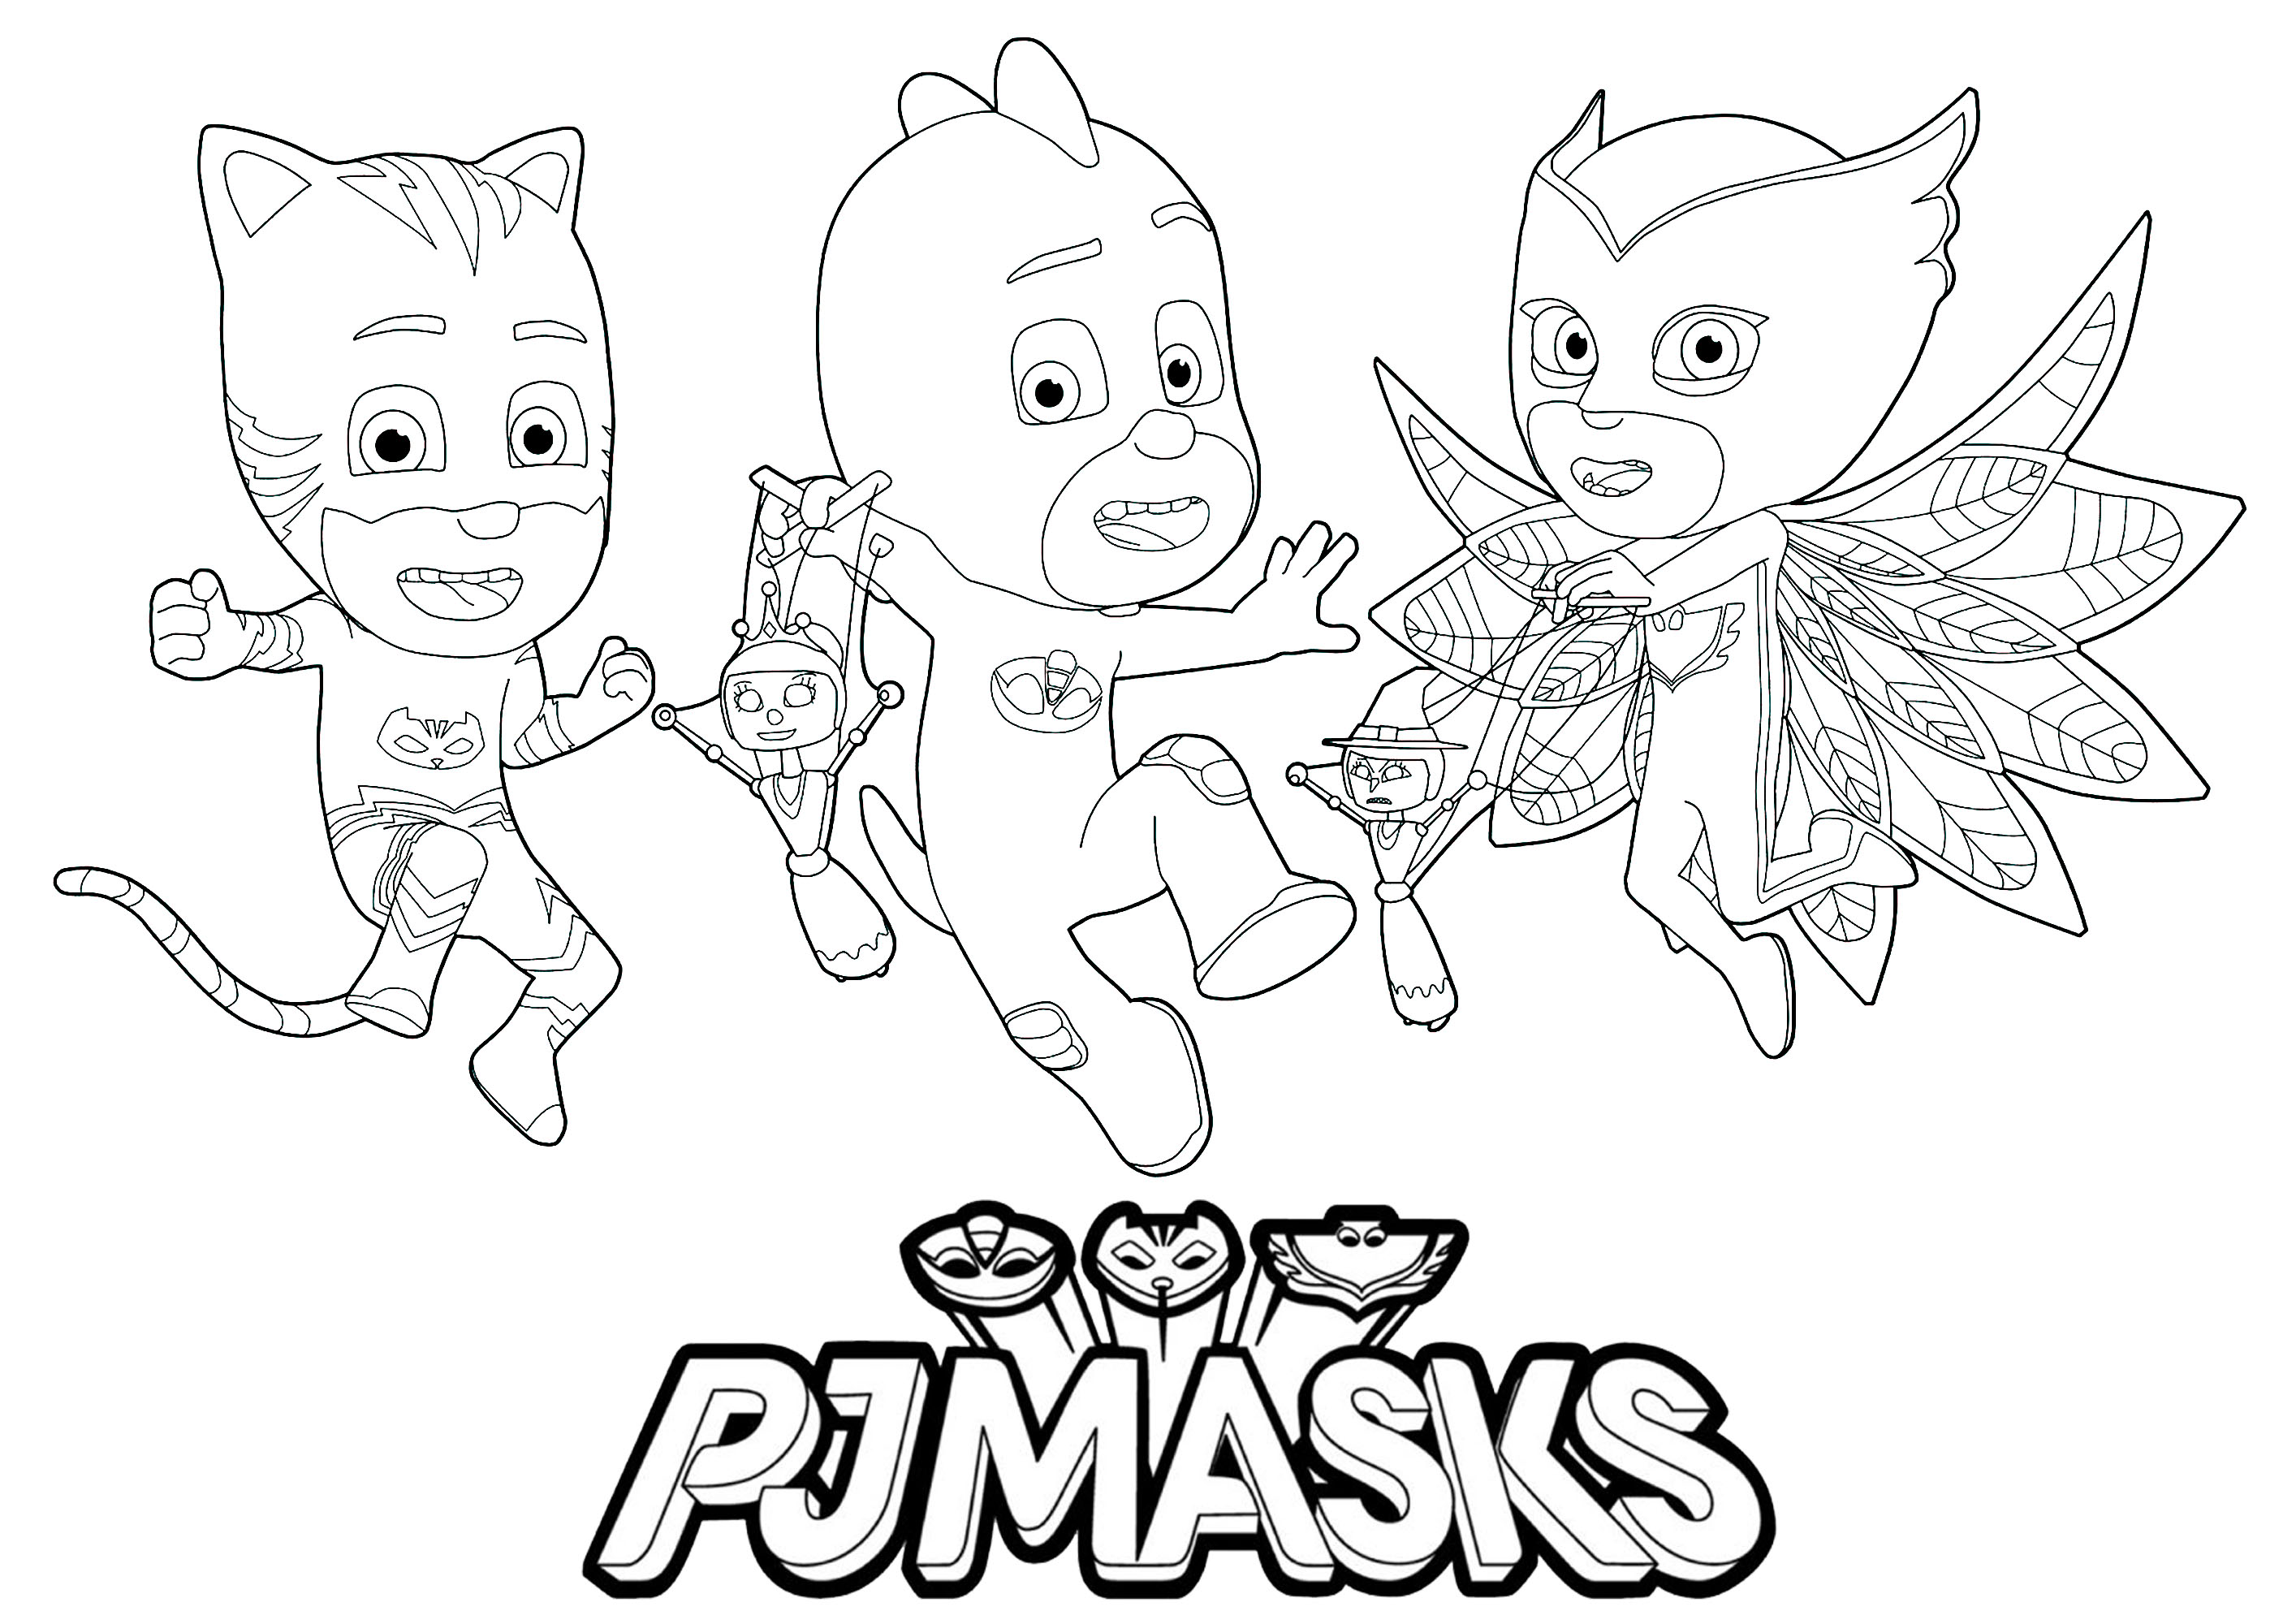 PJ Masks Logo and 3 characters PJ Masks Kids Coloring Pages